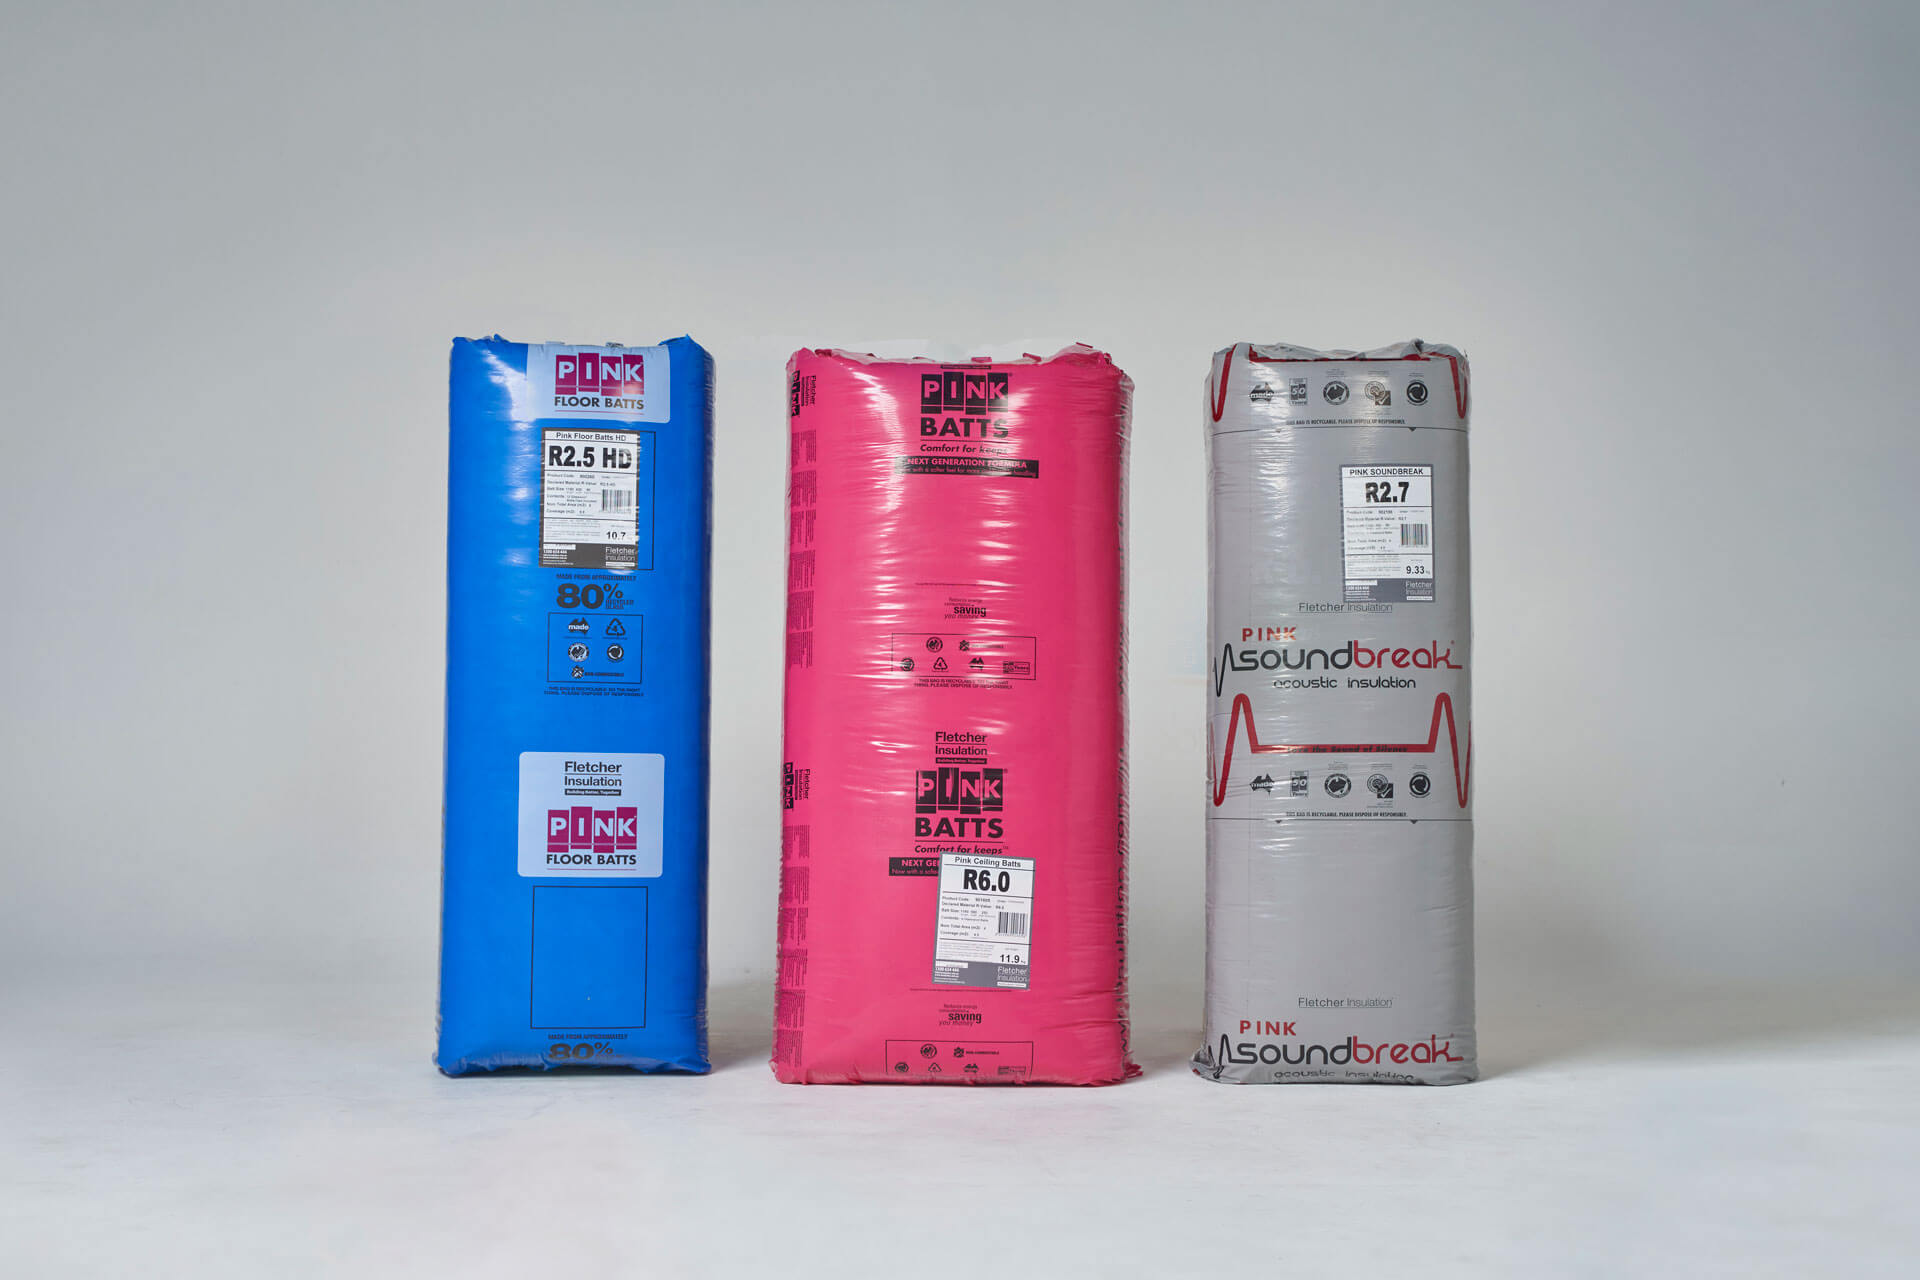 Buy Pink Batts Insulation Online - Cheap Soundbreak